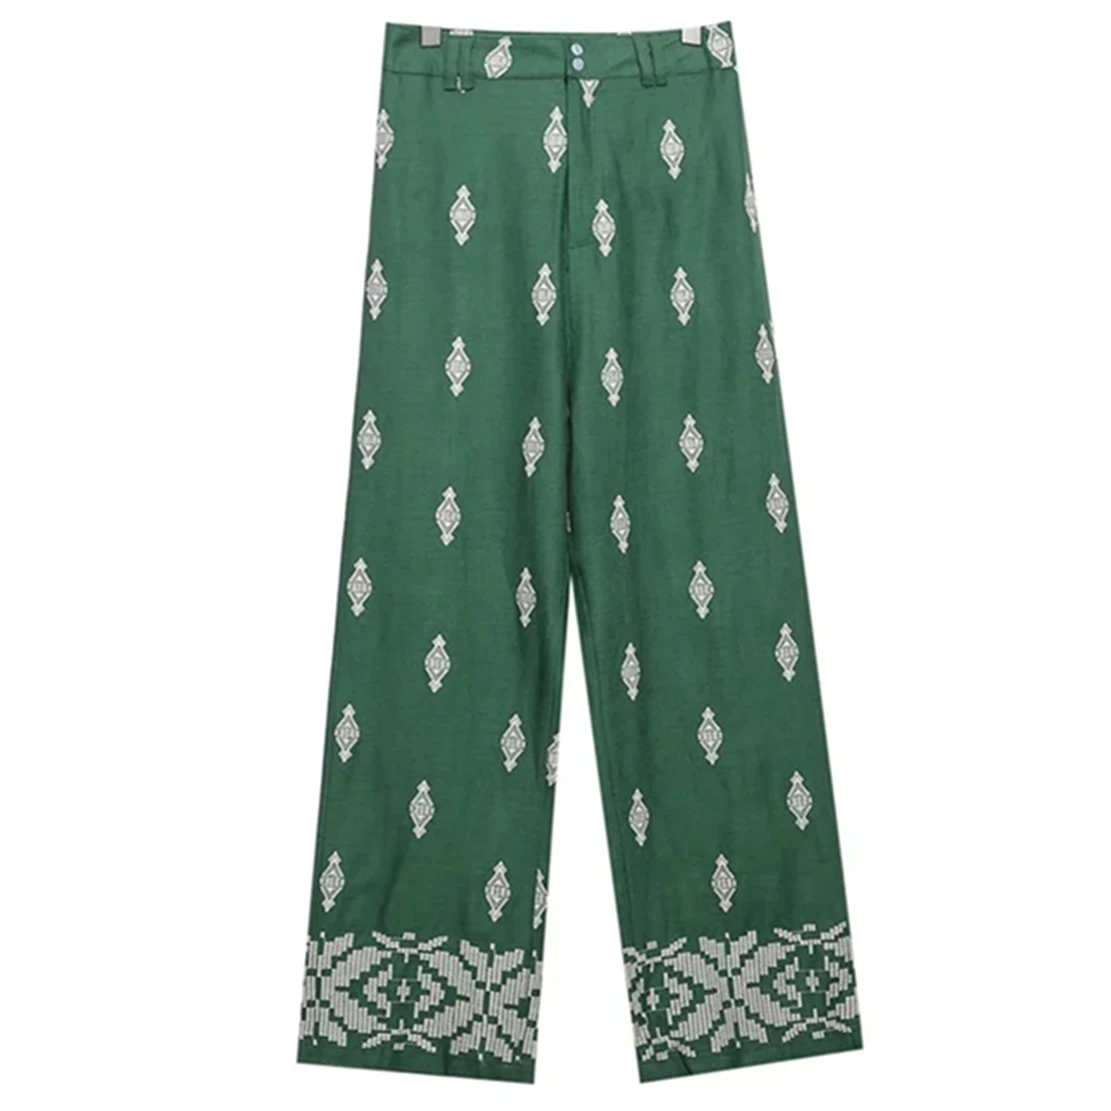 Maxdutti Geometric Embroidery High Waist Loose Casual Pants Women Indie Folk Bohemian Style Vintage Green Pants Linen Trousers